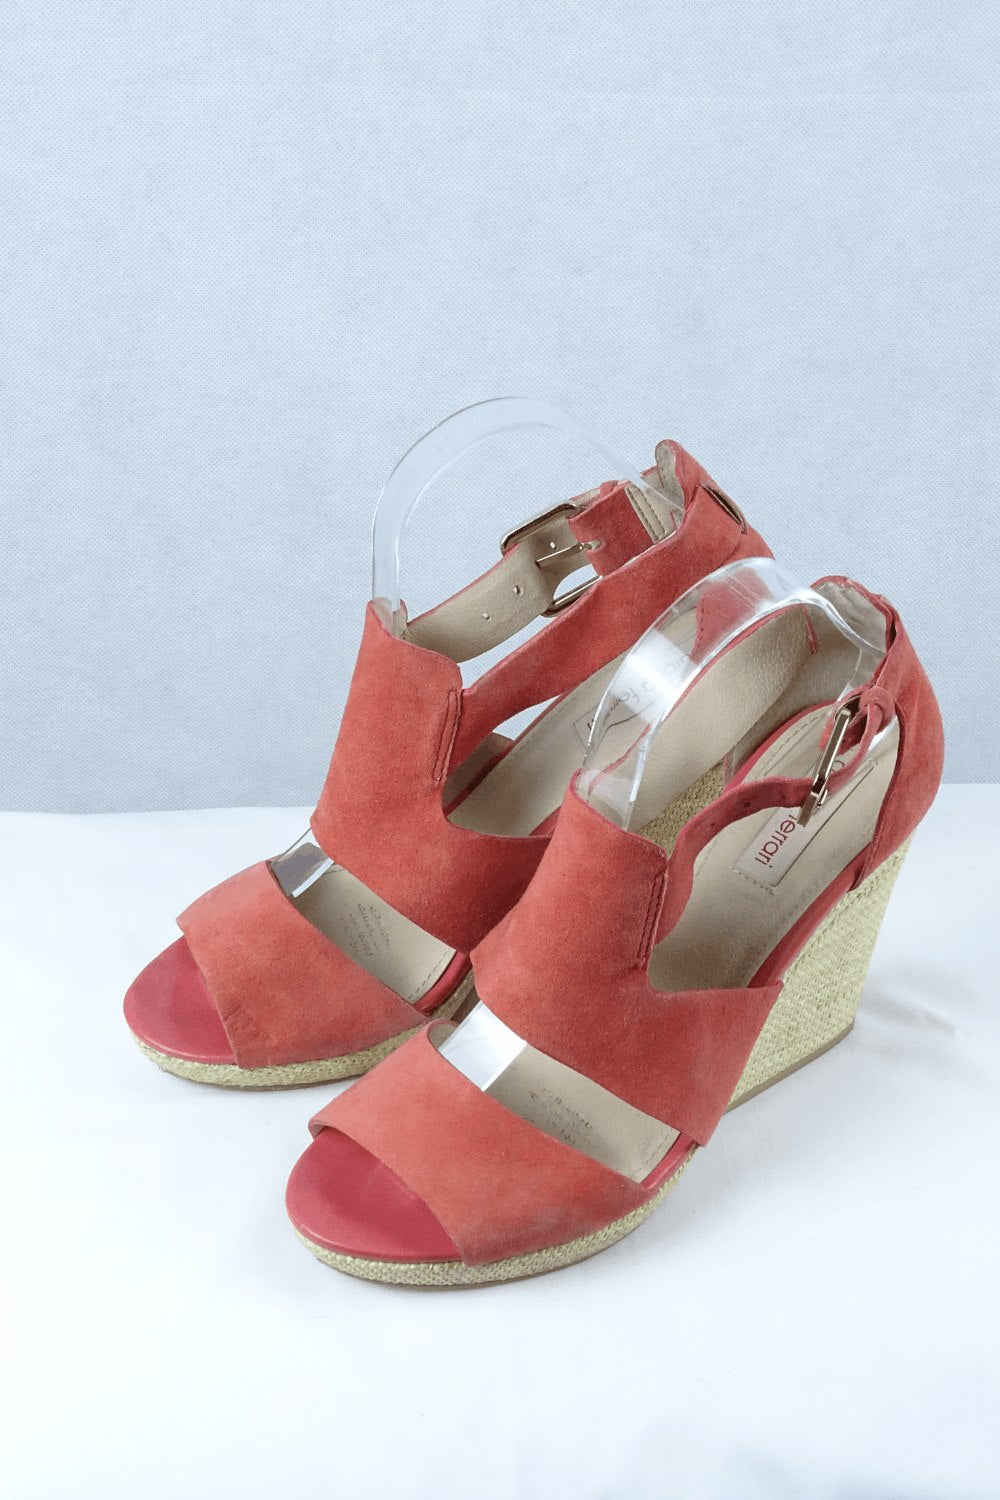 Diana Ferrari Red Heels 8